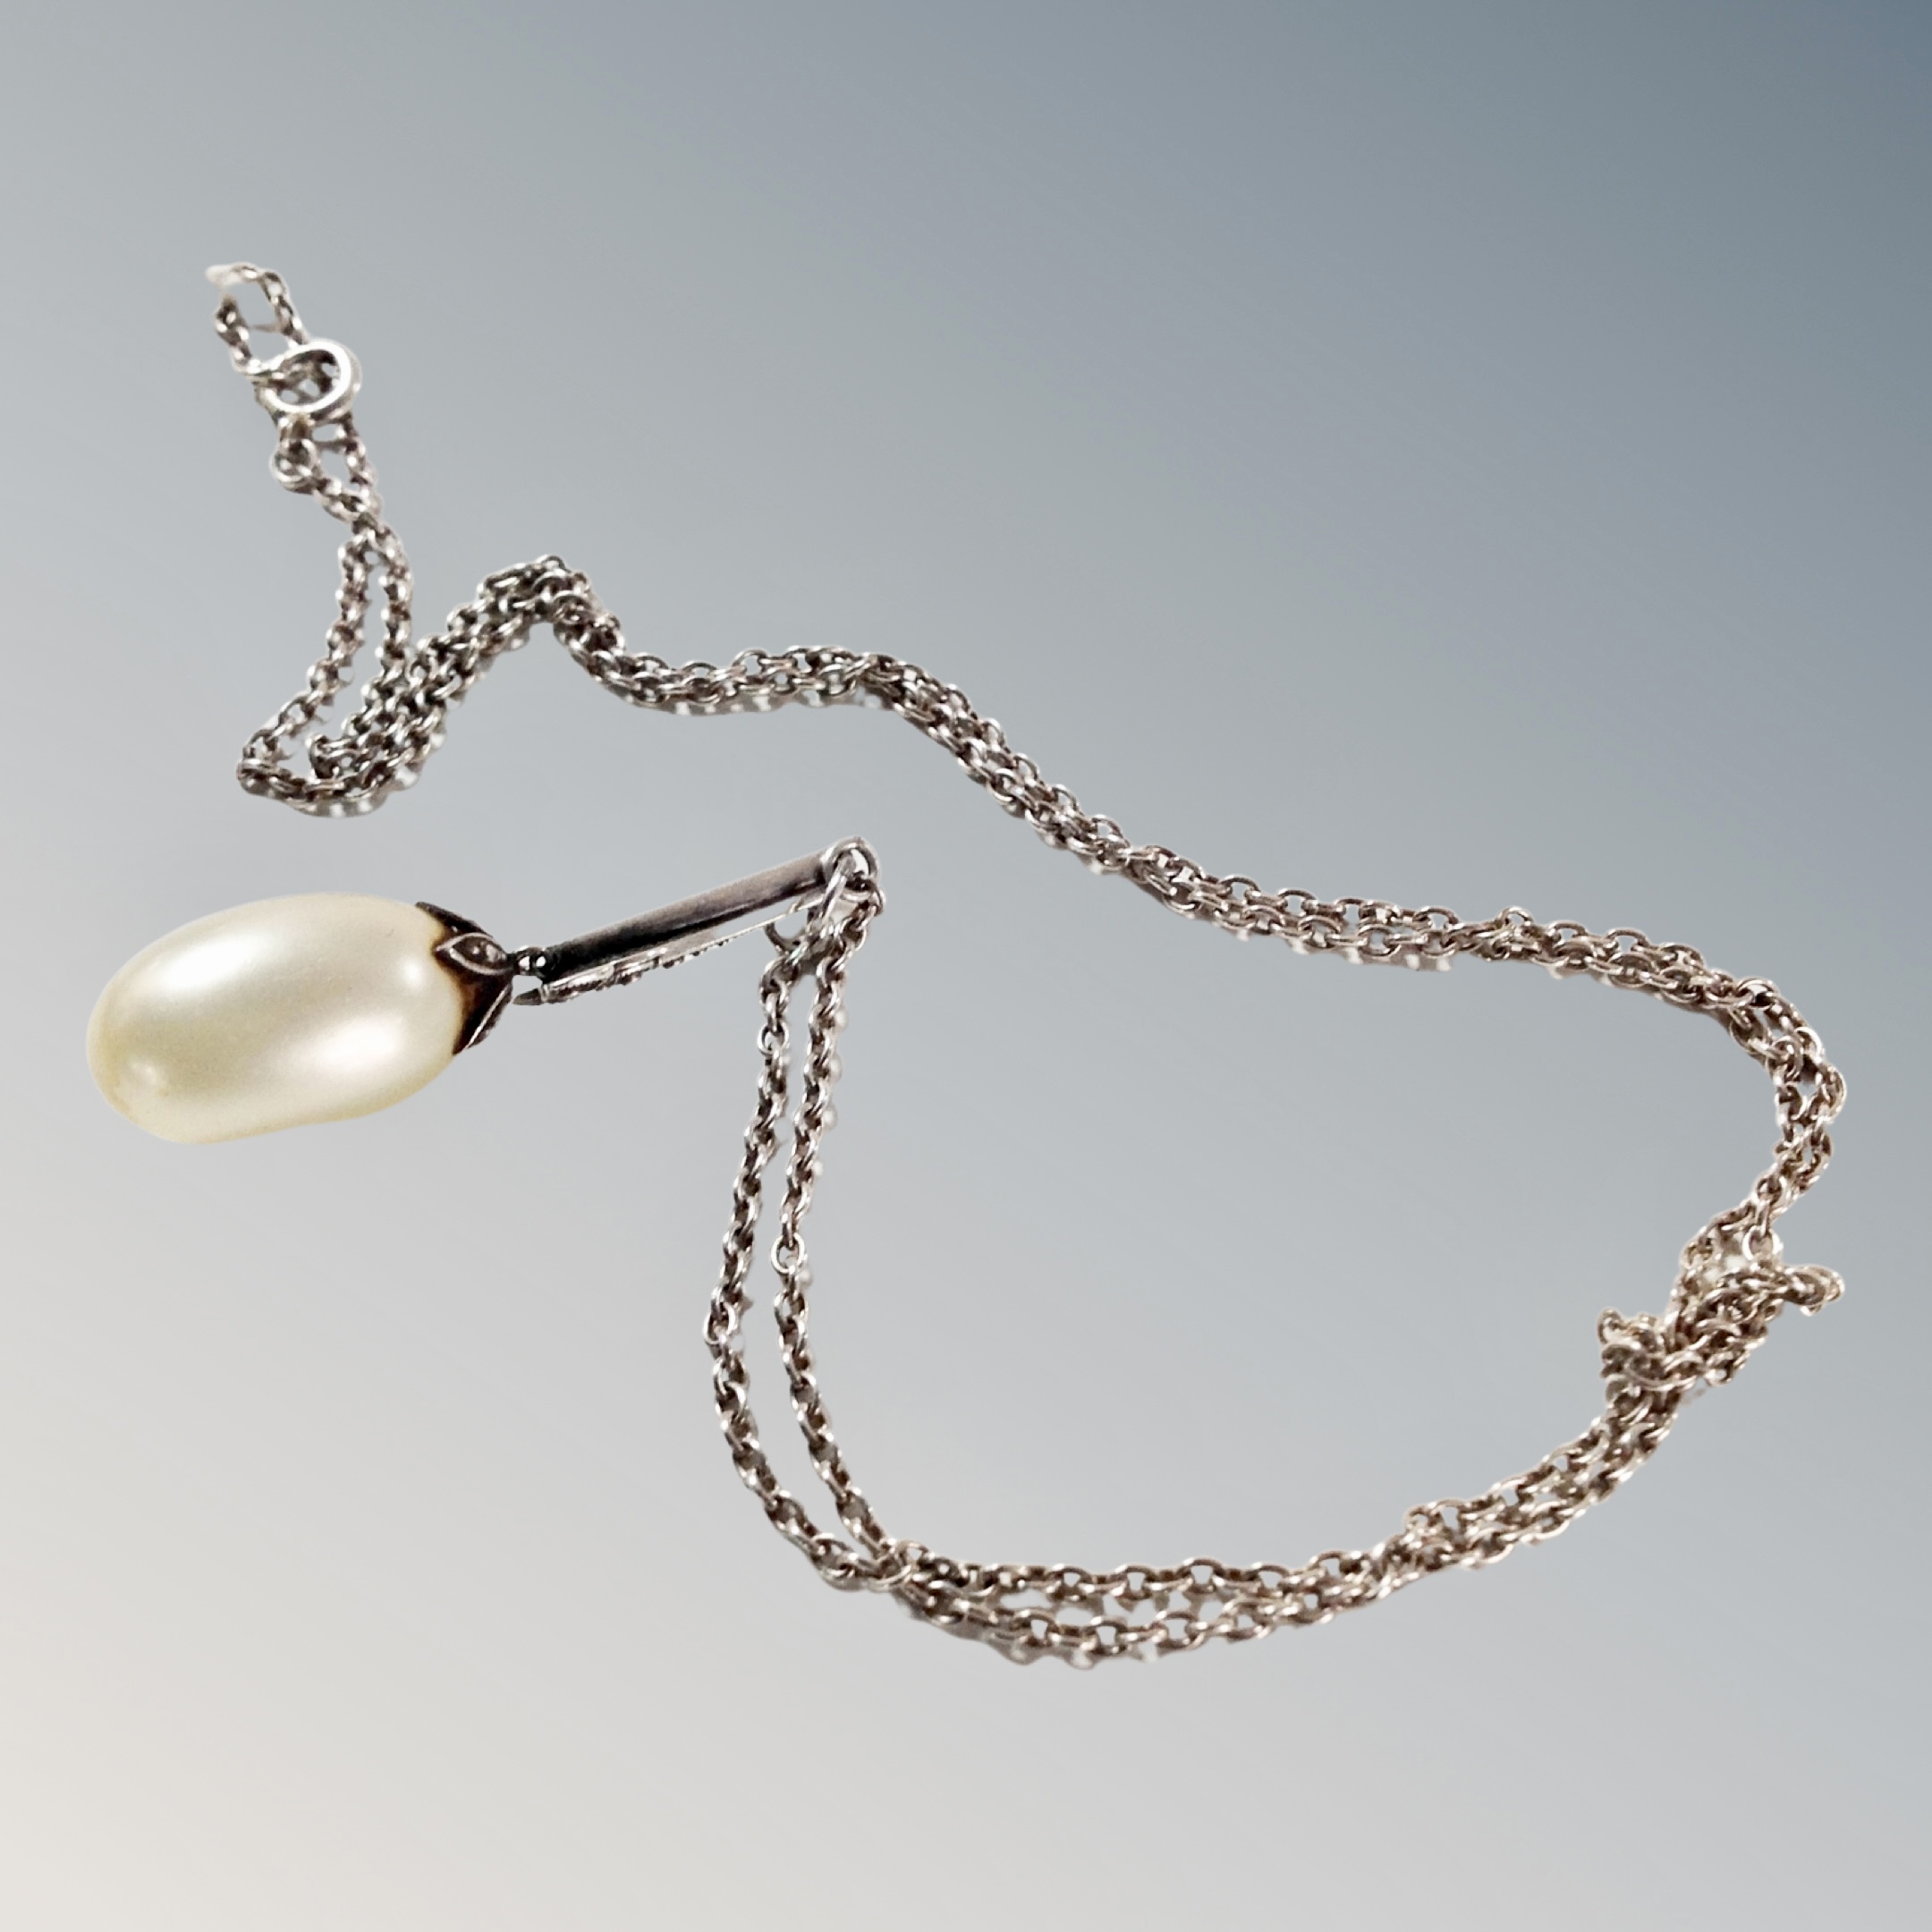 A Baroque teardrop pearl in an Art Deco setting on sterling silver chain, 7.9g gross.